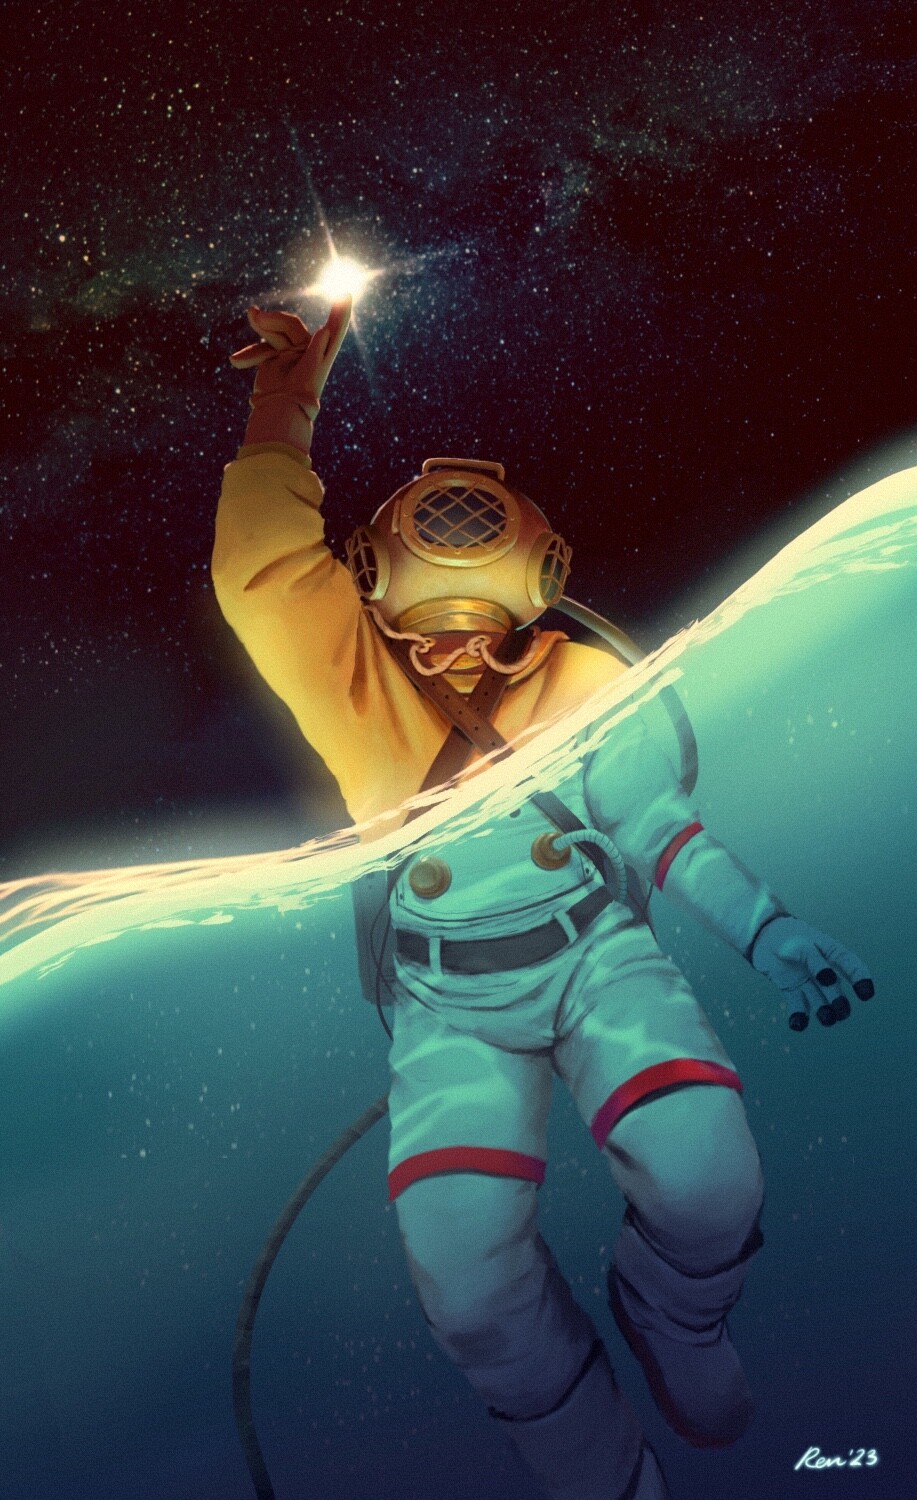 Space diver